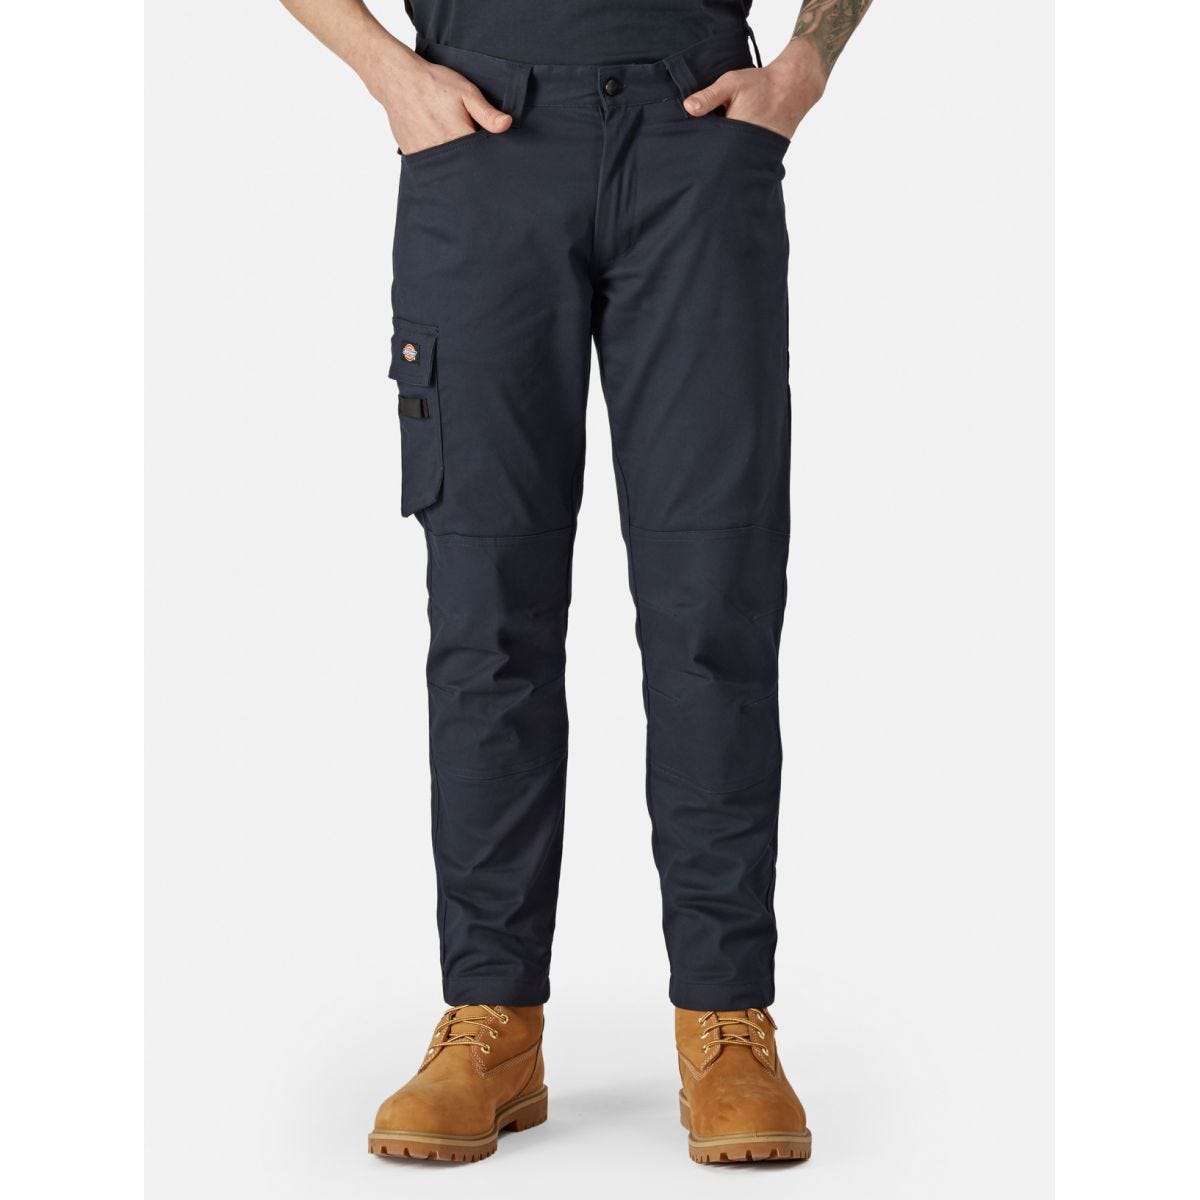 Pantalon Lead In Flex Bleu marine - Dickies - Taille 46 1